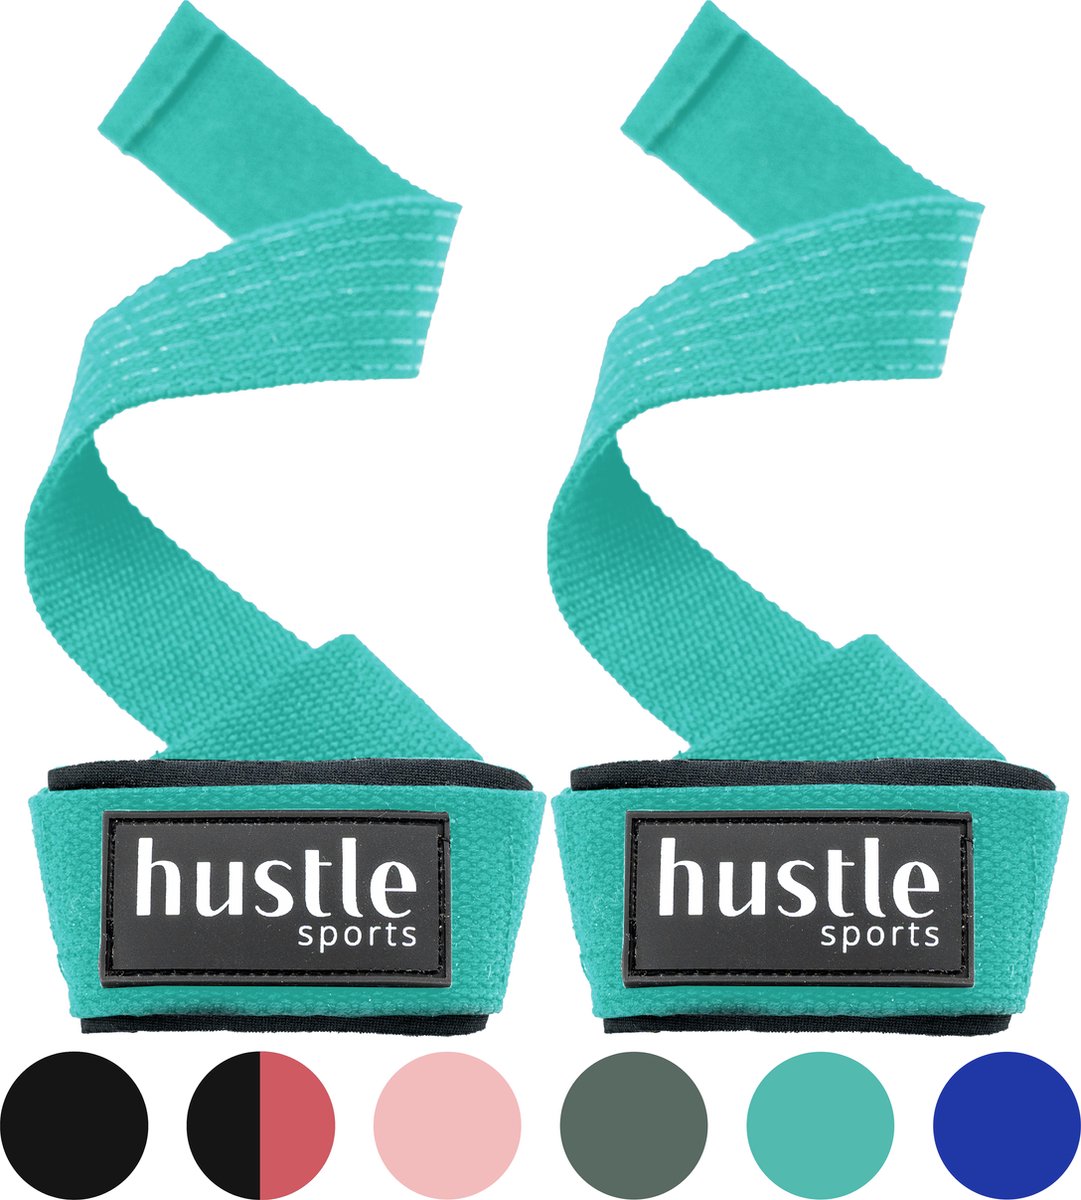 hustle - Cyaan Anti-Slip Lifting Straps - met Padding en Anti-slip - Padded - Lifting Grips/Hooks - Deadlift Straps - Voor Fitness